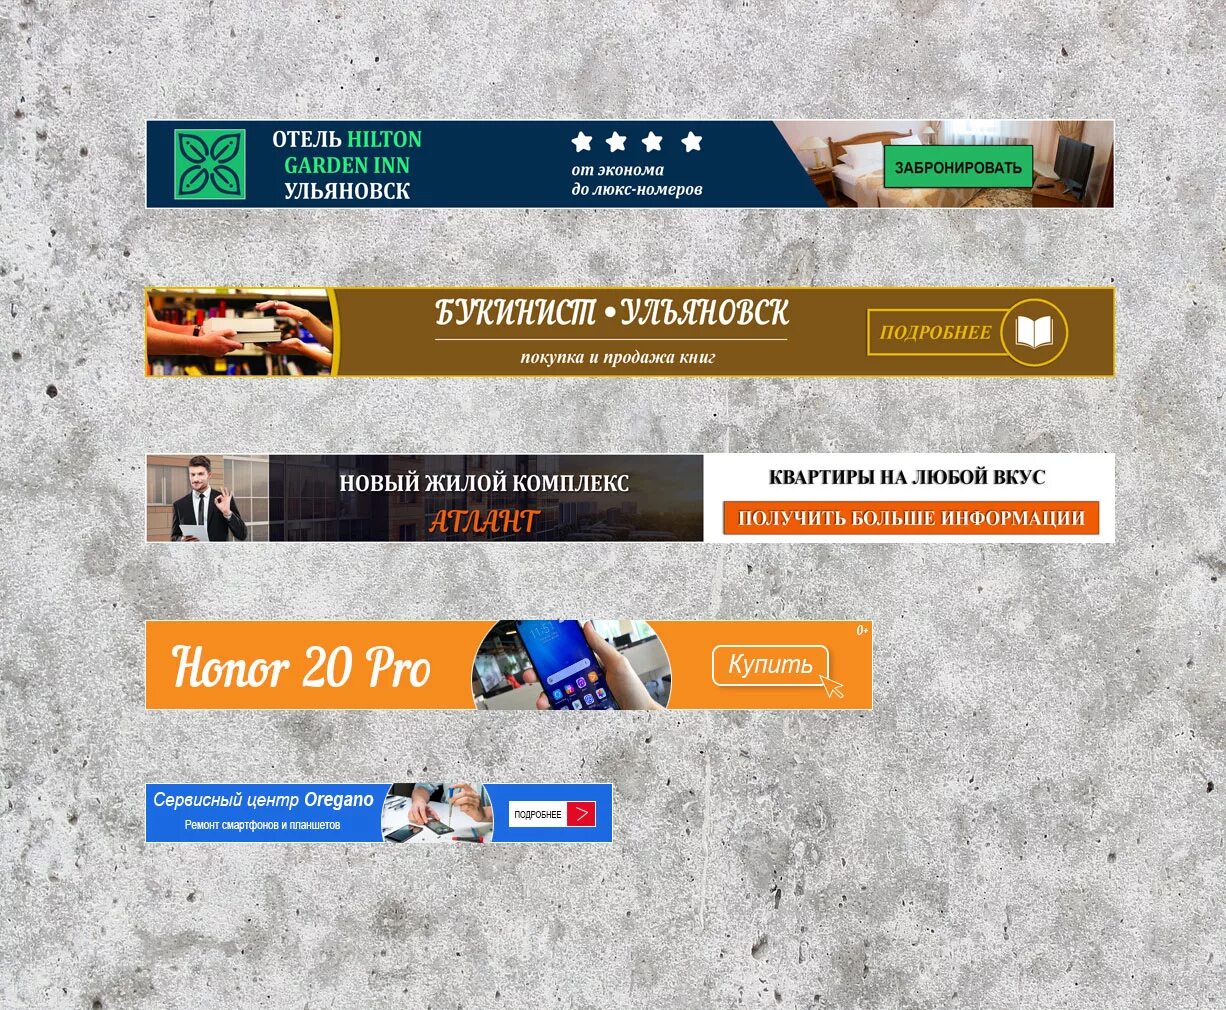 Подробная реклама сайта. Баннер для сайта. Рекламный баннер для сайта. Продающие баннеры для сайта. Banner для сайта.